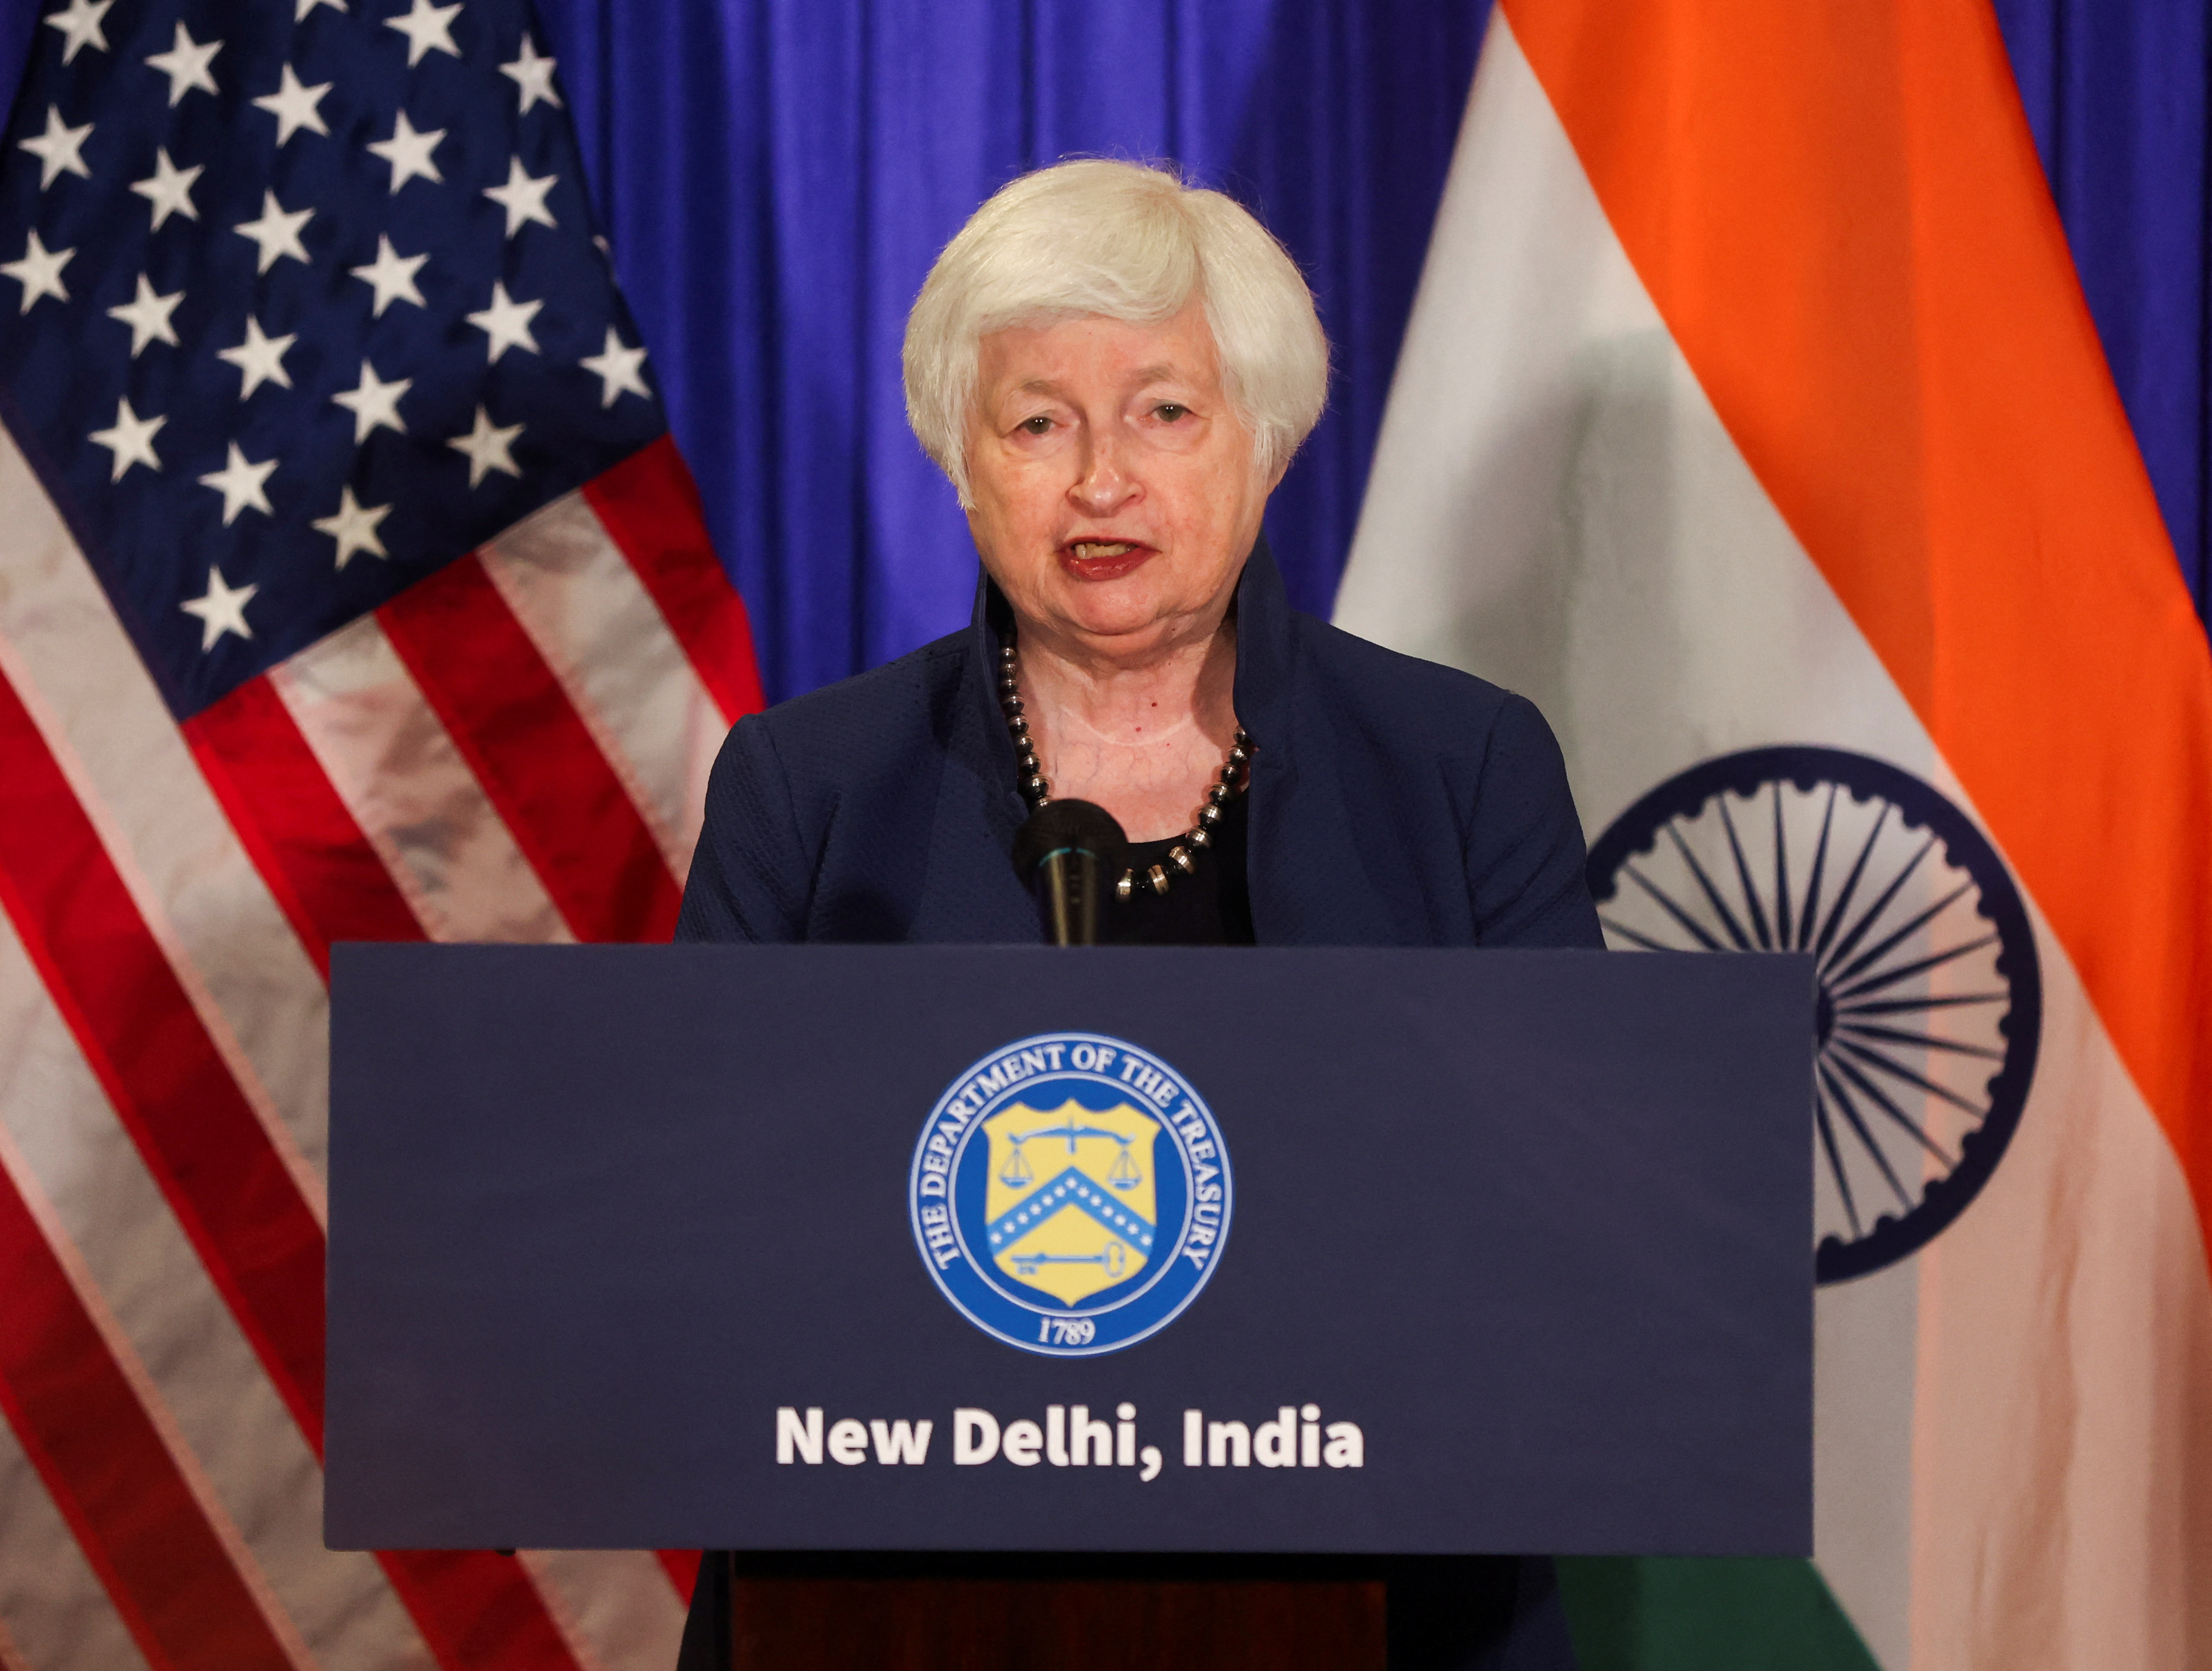 U.S. Treasury Secretary Yellen addresses the media ahead of the G20 Summit in New Delhi